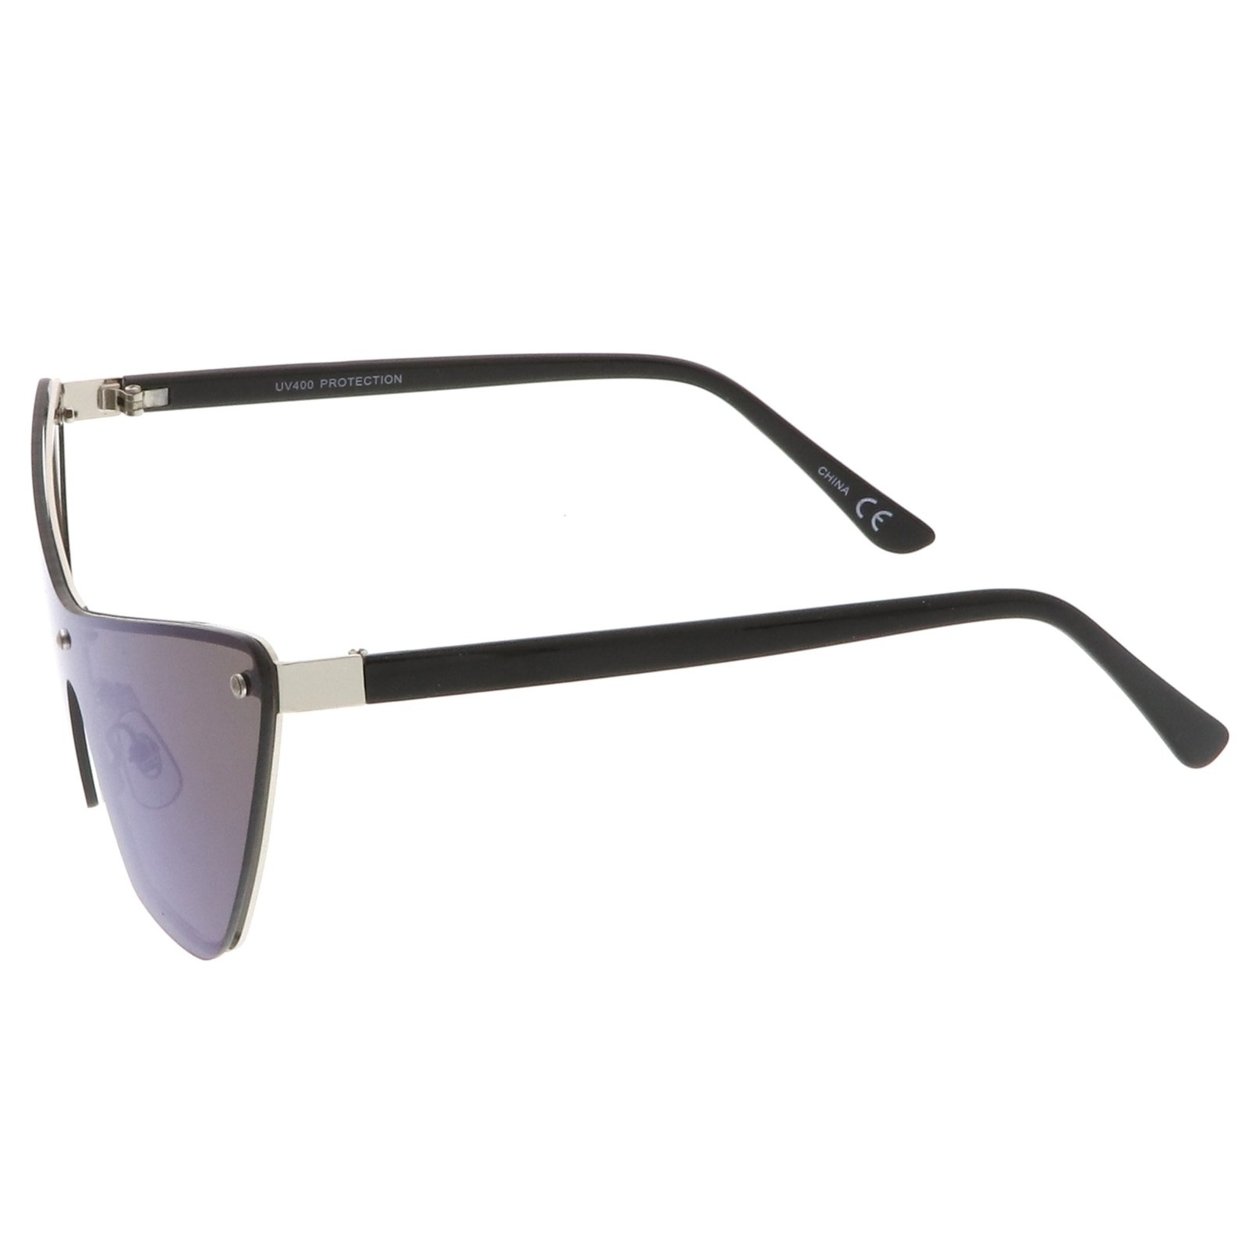 Oversize Rimless Colored Mirror Mono Lens Shield Cat Eye Sunglasses 68mm - Gold Tortoise / Gold Mirror